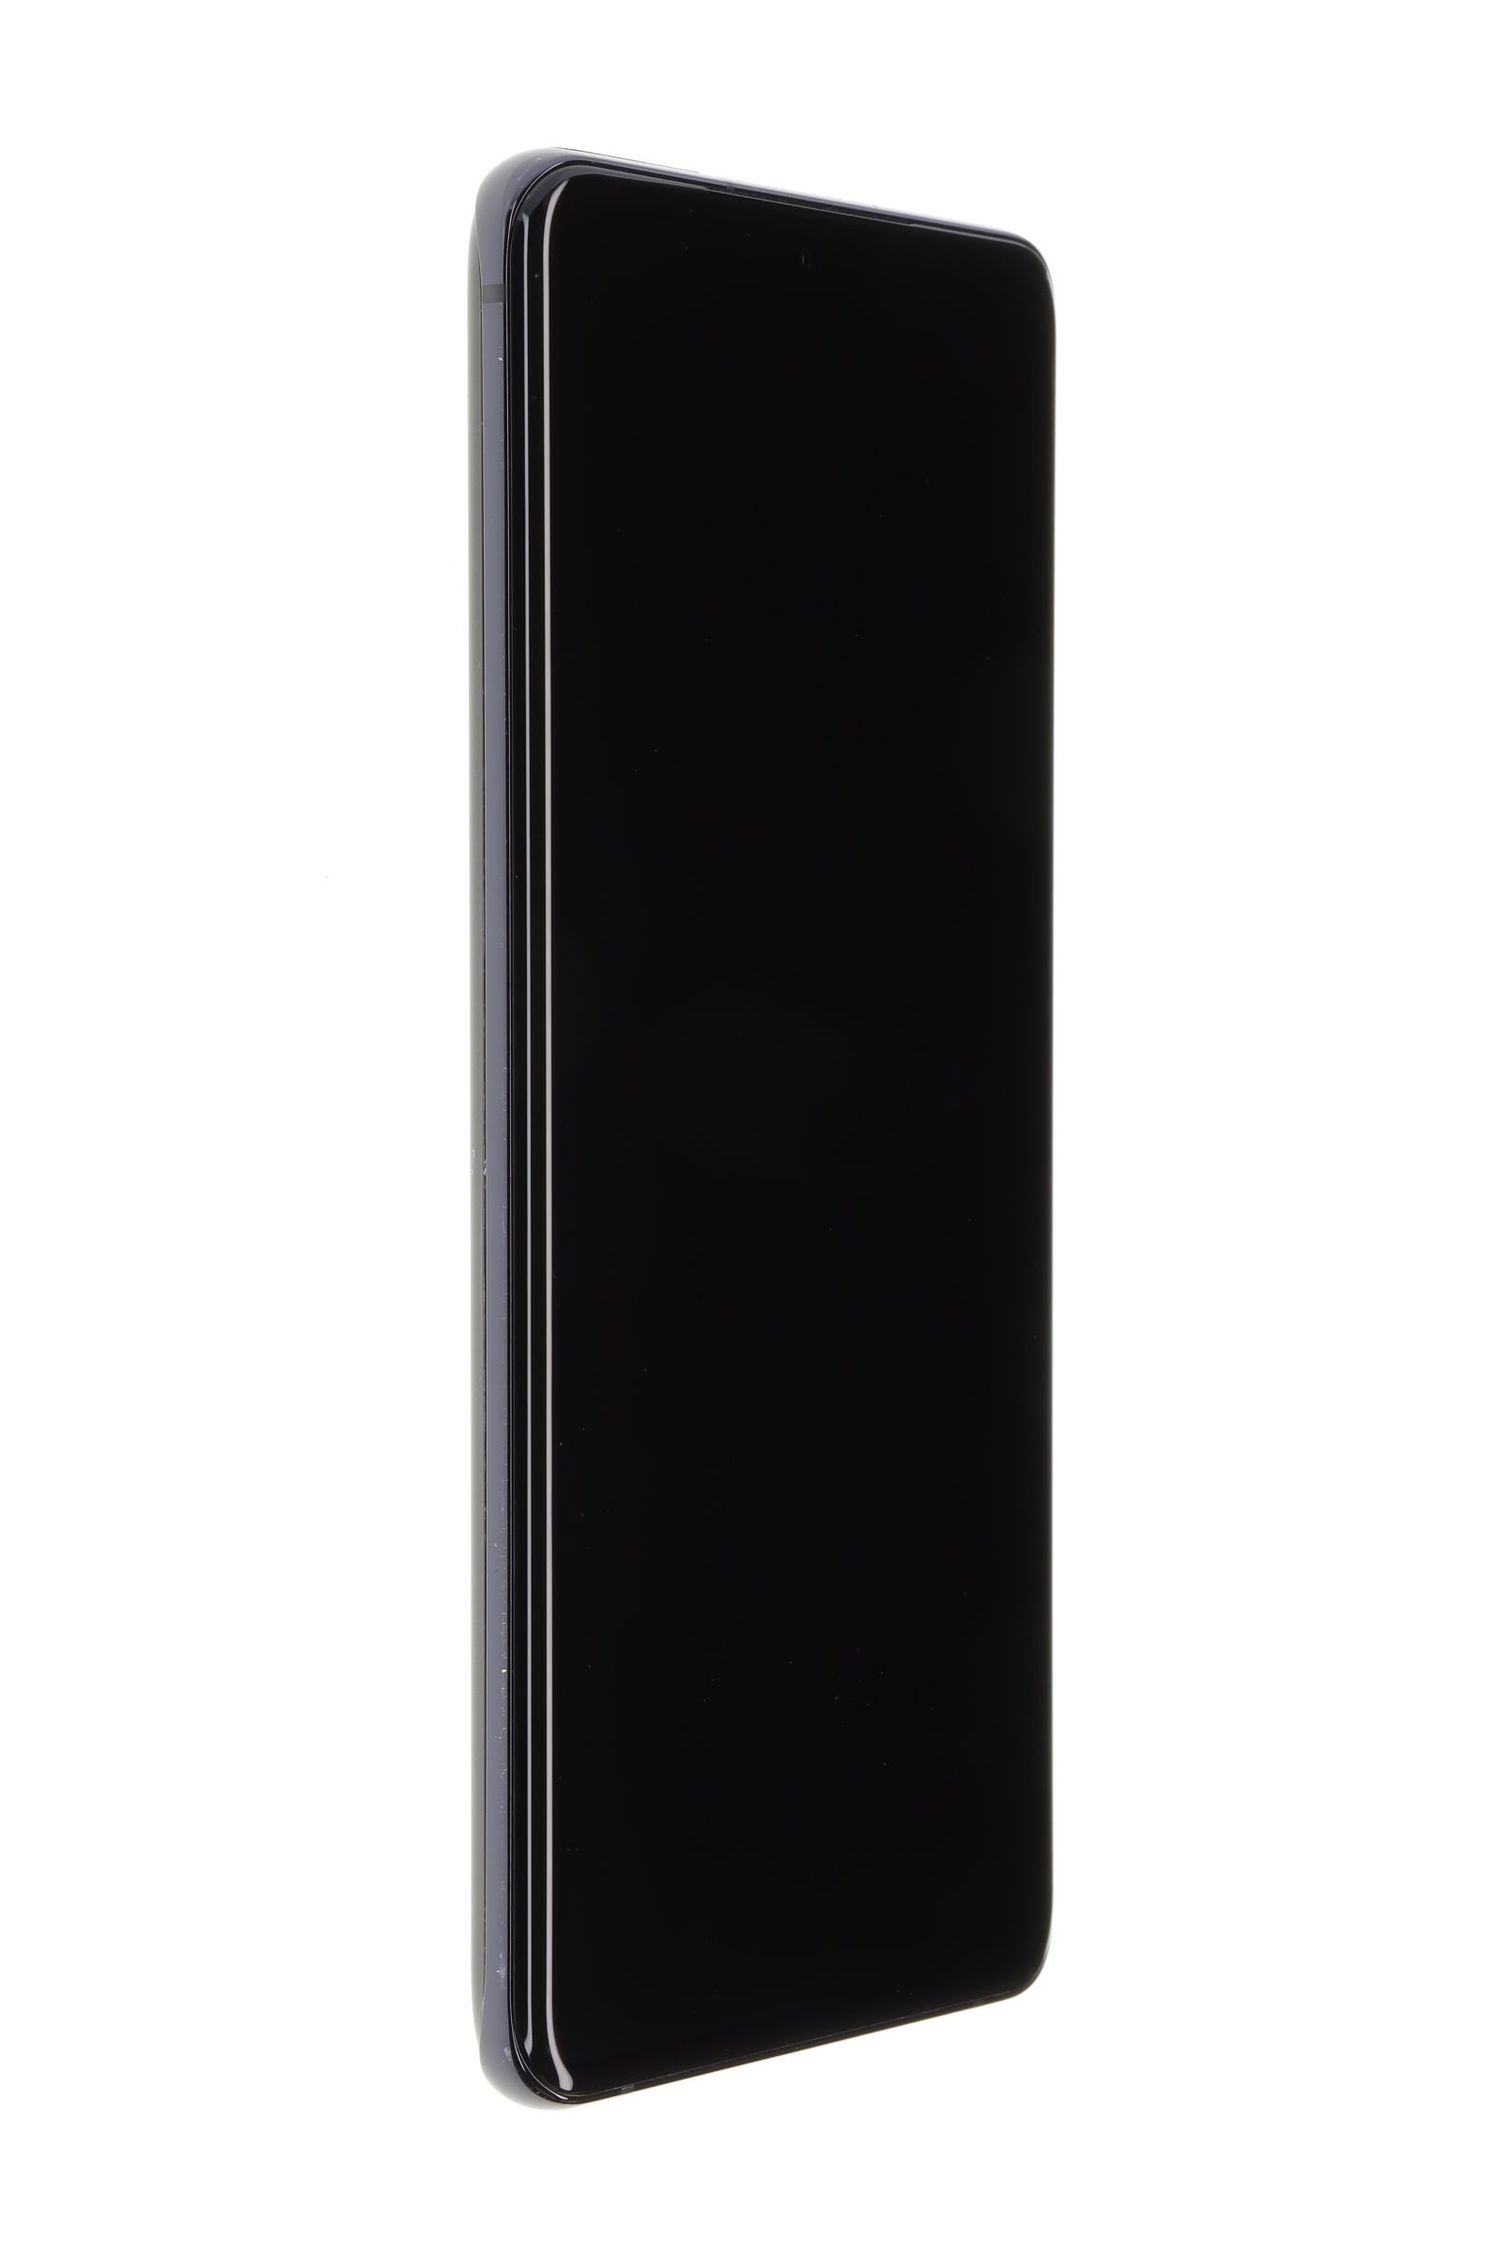 Telefon mobil Samsung Galaxy S20 Ultra 5G Dual Sim, Cosmic Black, 128 GB, Excelent